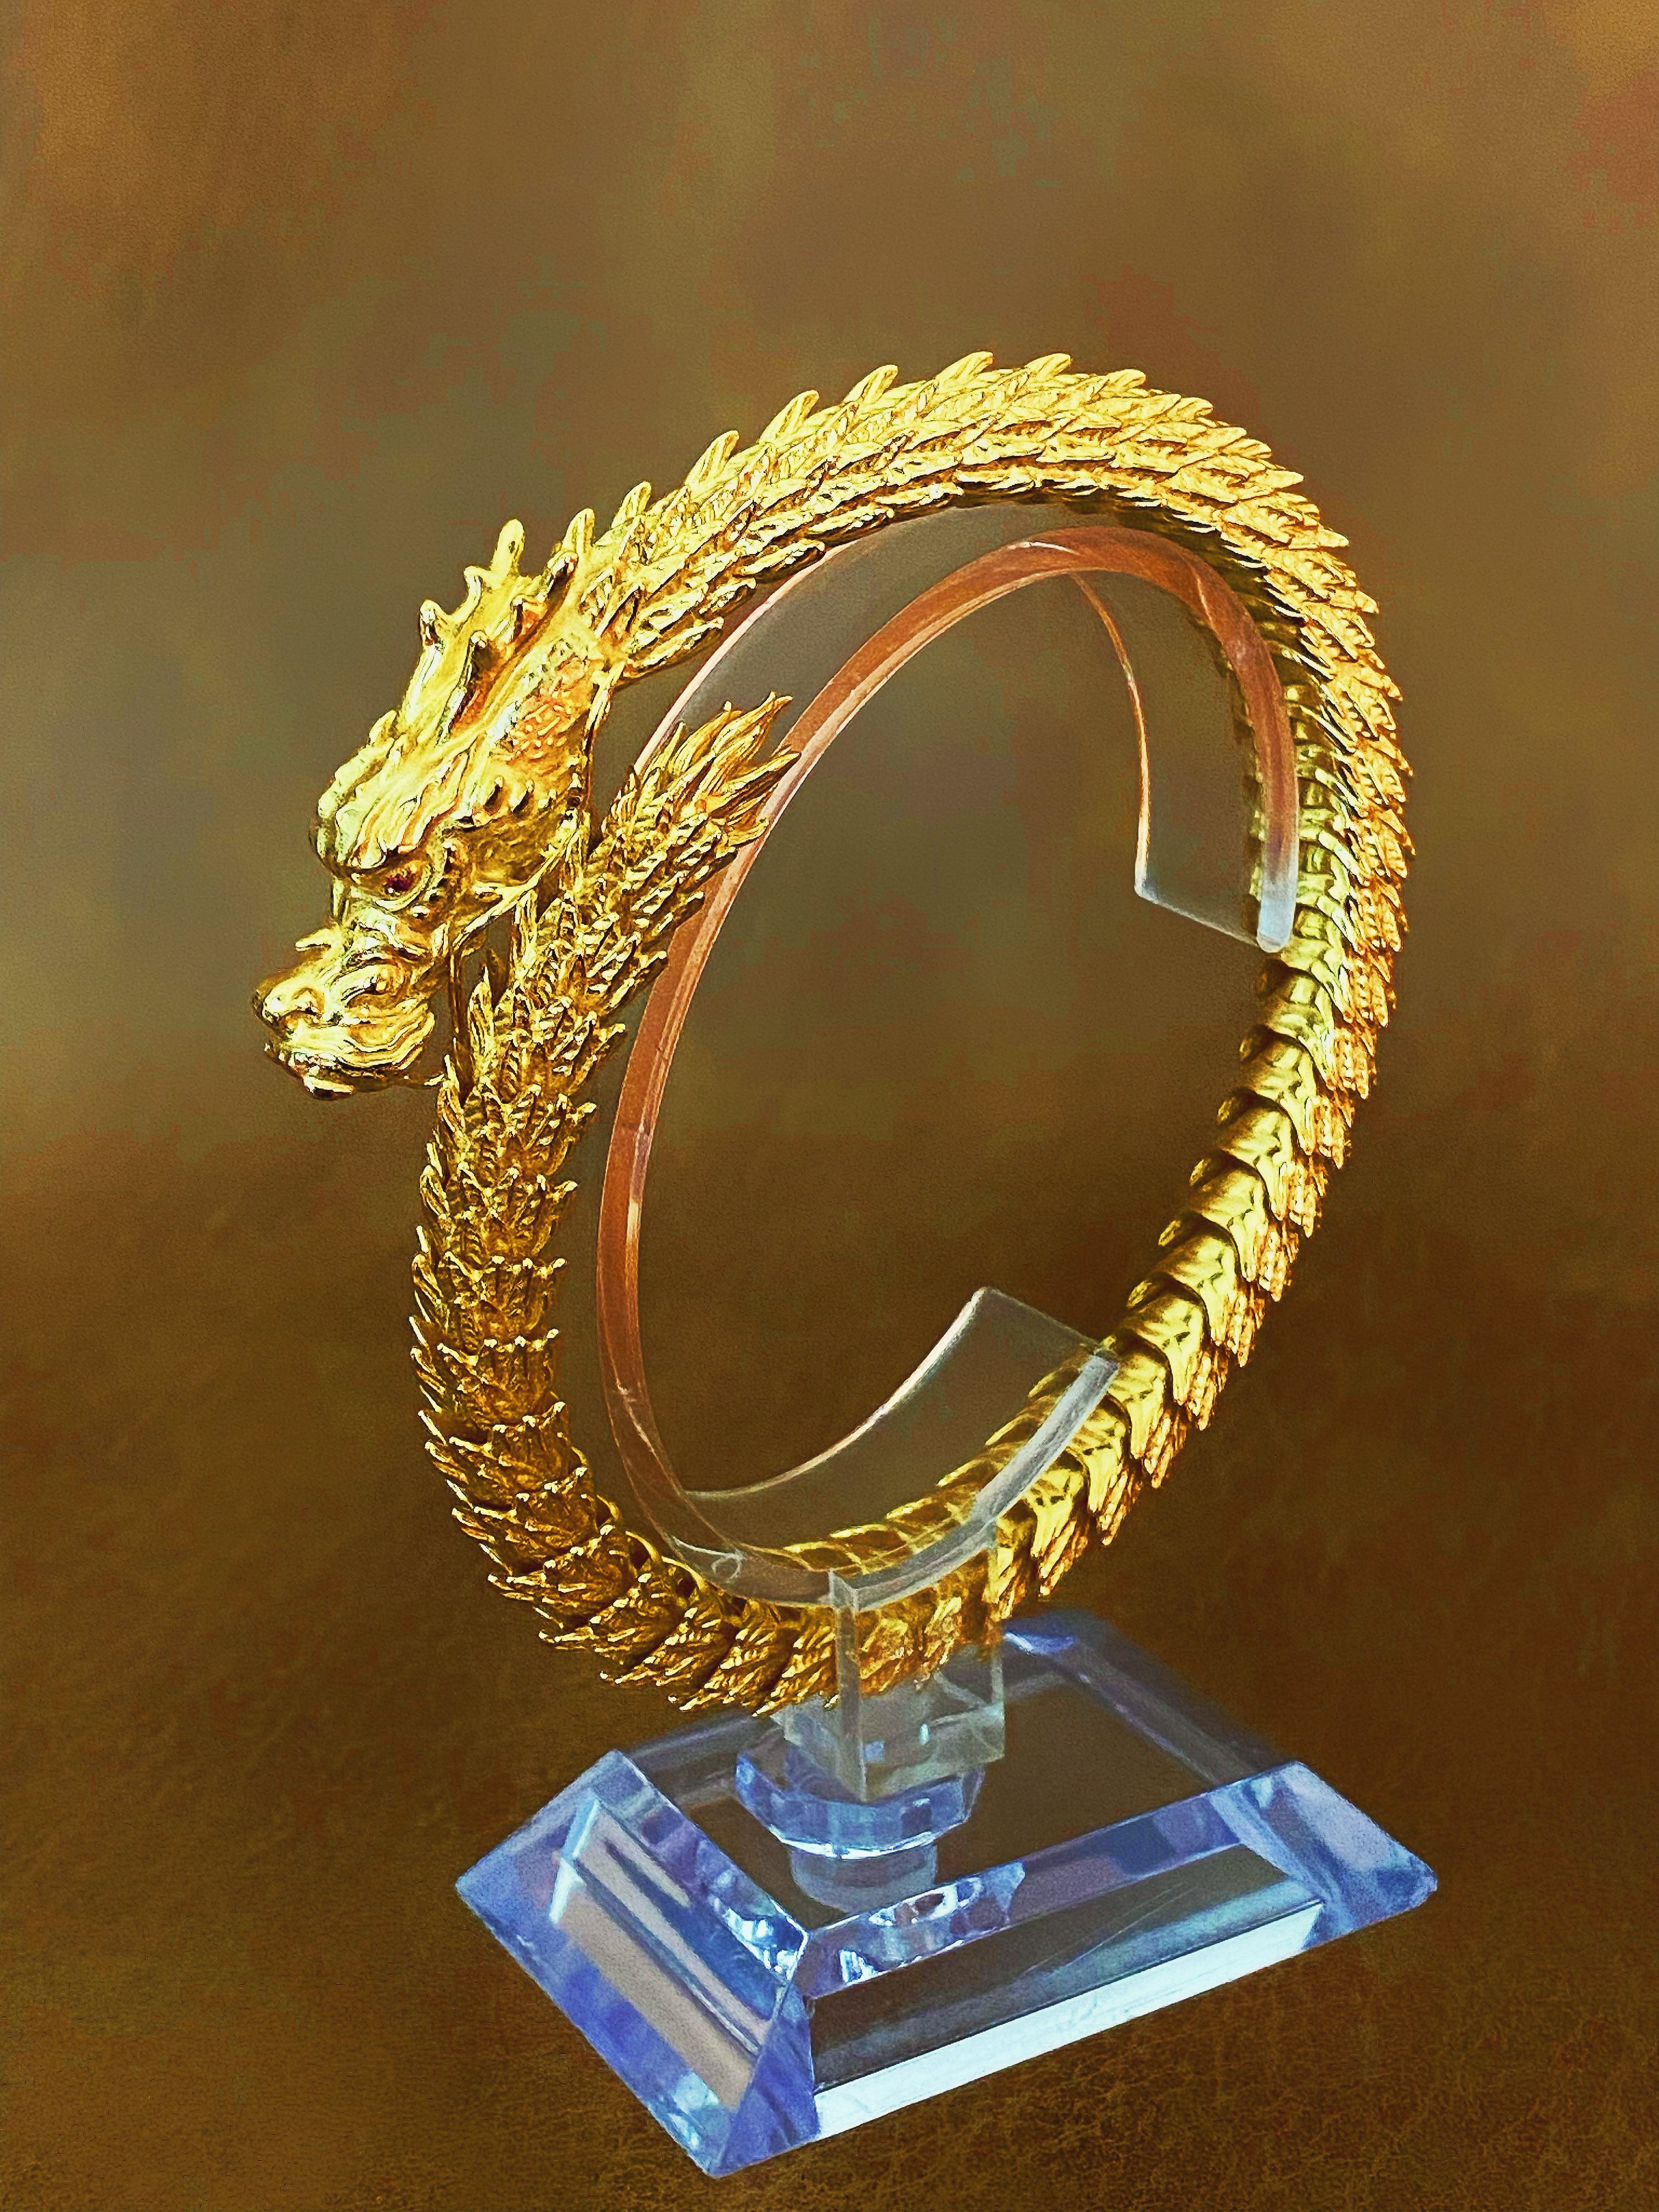 Dragon Elastic 9k/14k/18k Gold Bracelet (Item No. GB001）